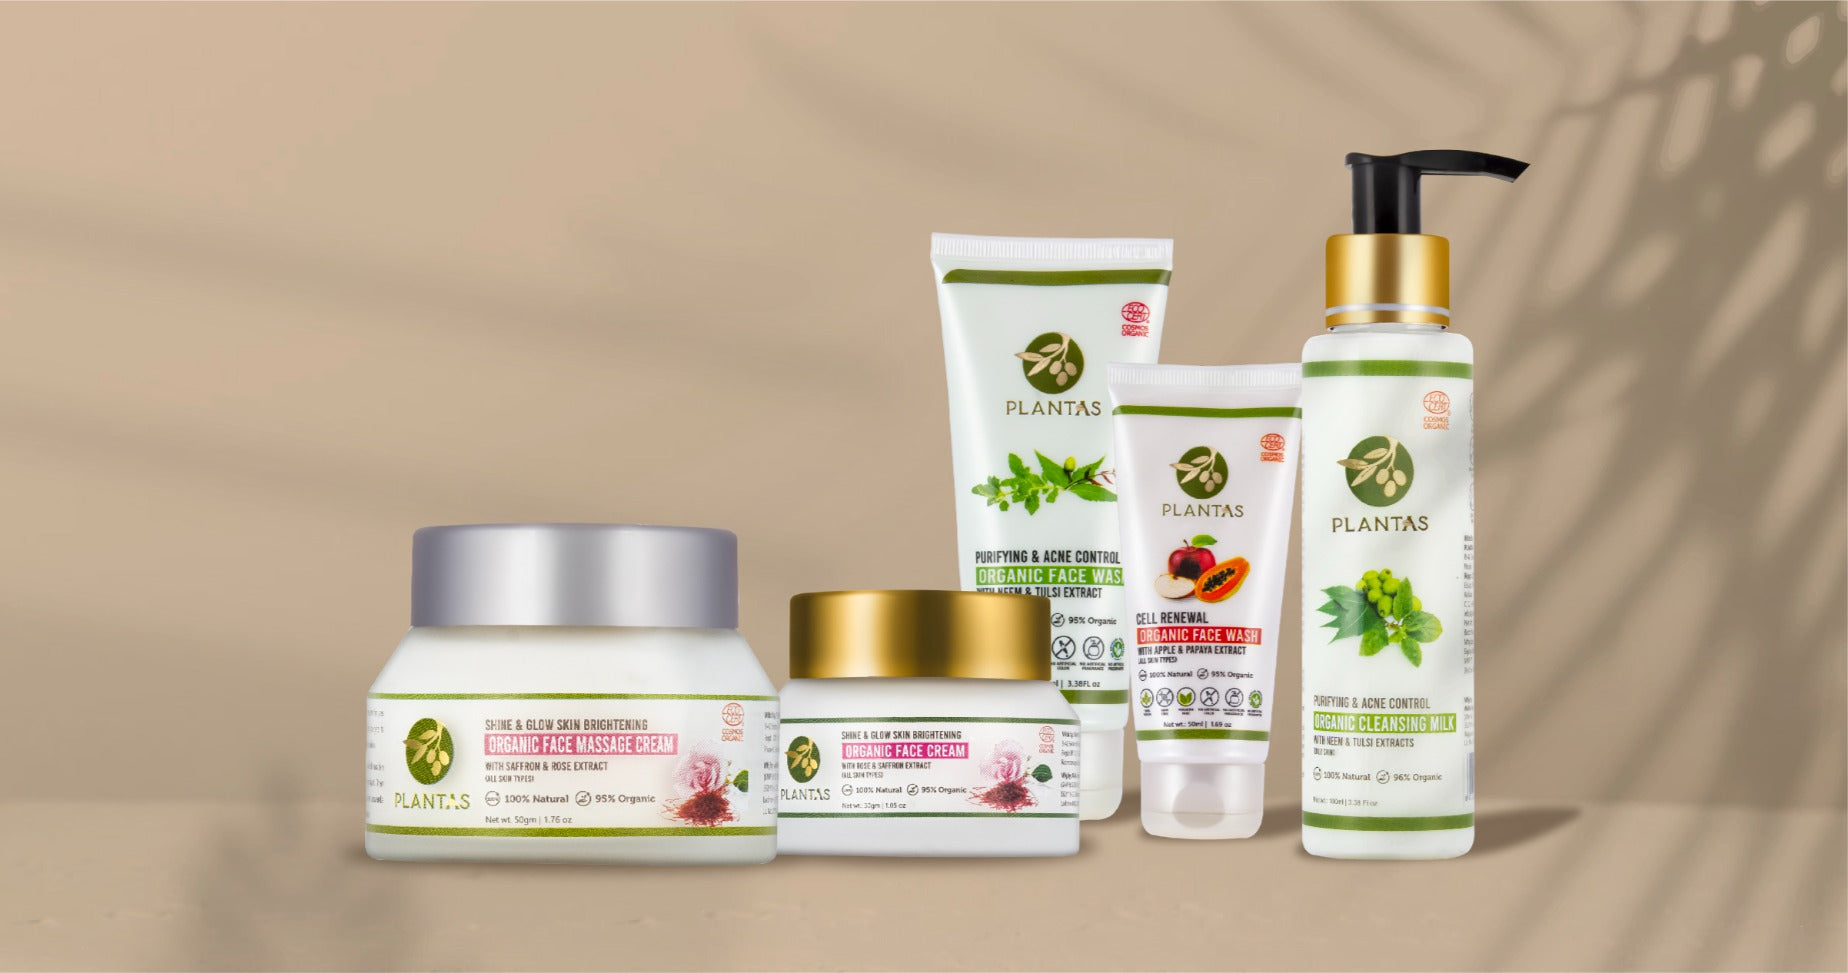 Plantas - Winter Skincare Routine Products